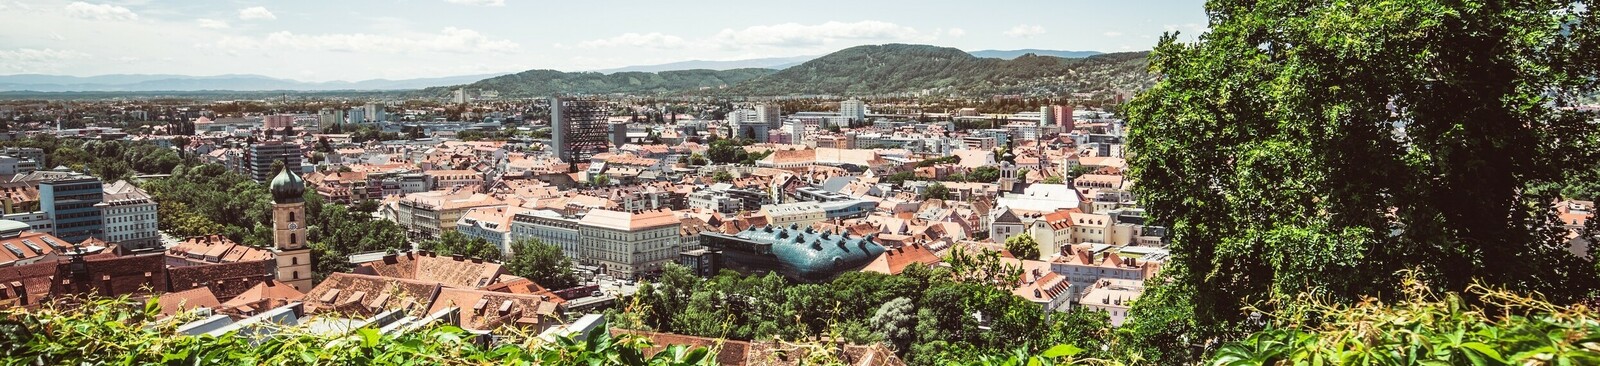 Graz Altstadt, Blick auf Dachlandschaft Graz